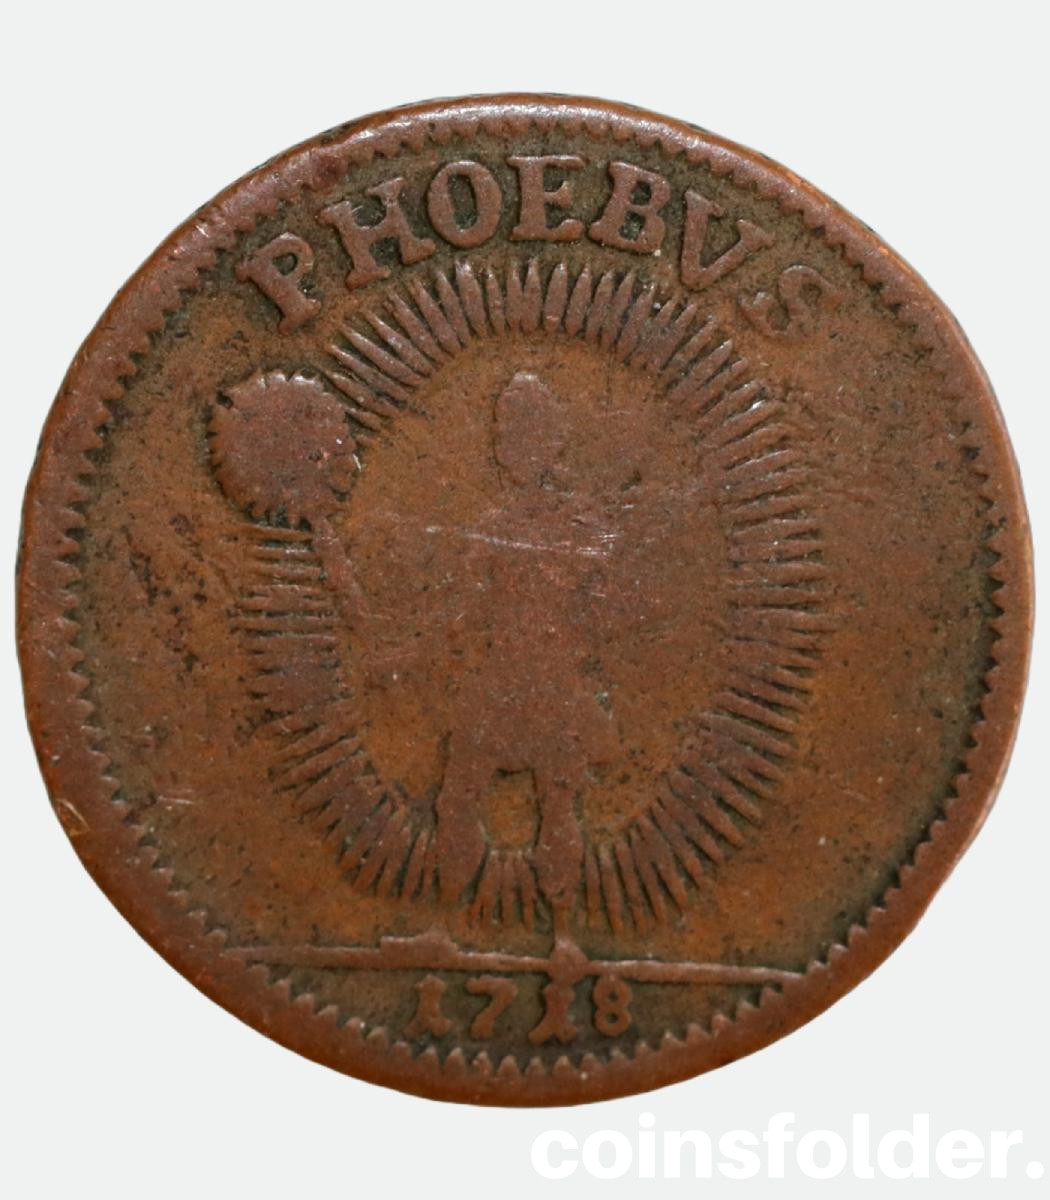 Sweden 1 Daler SM 1718, Apollo – Karl XII